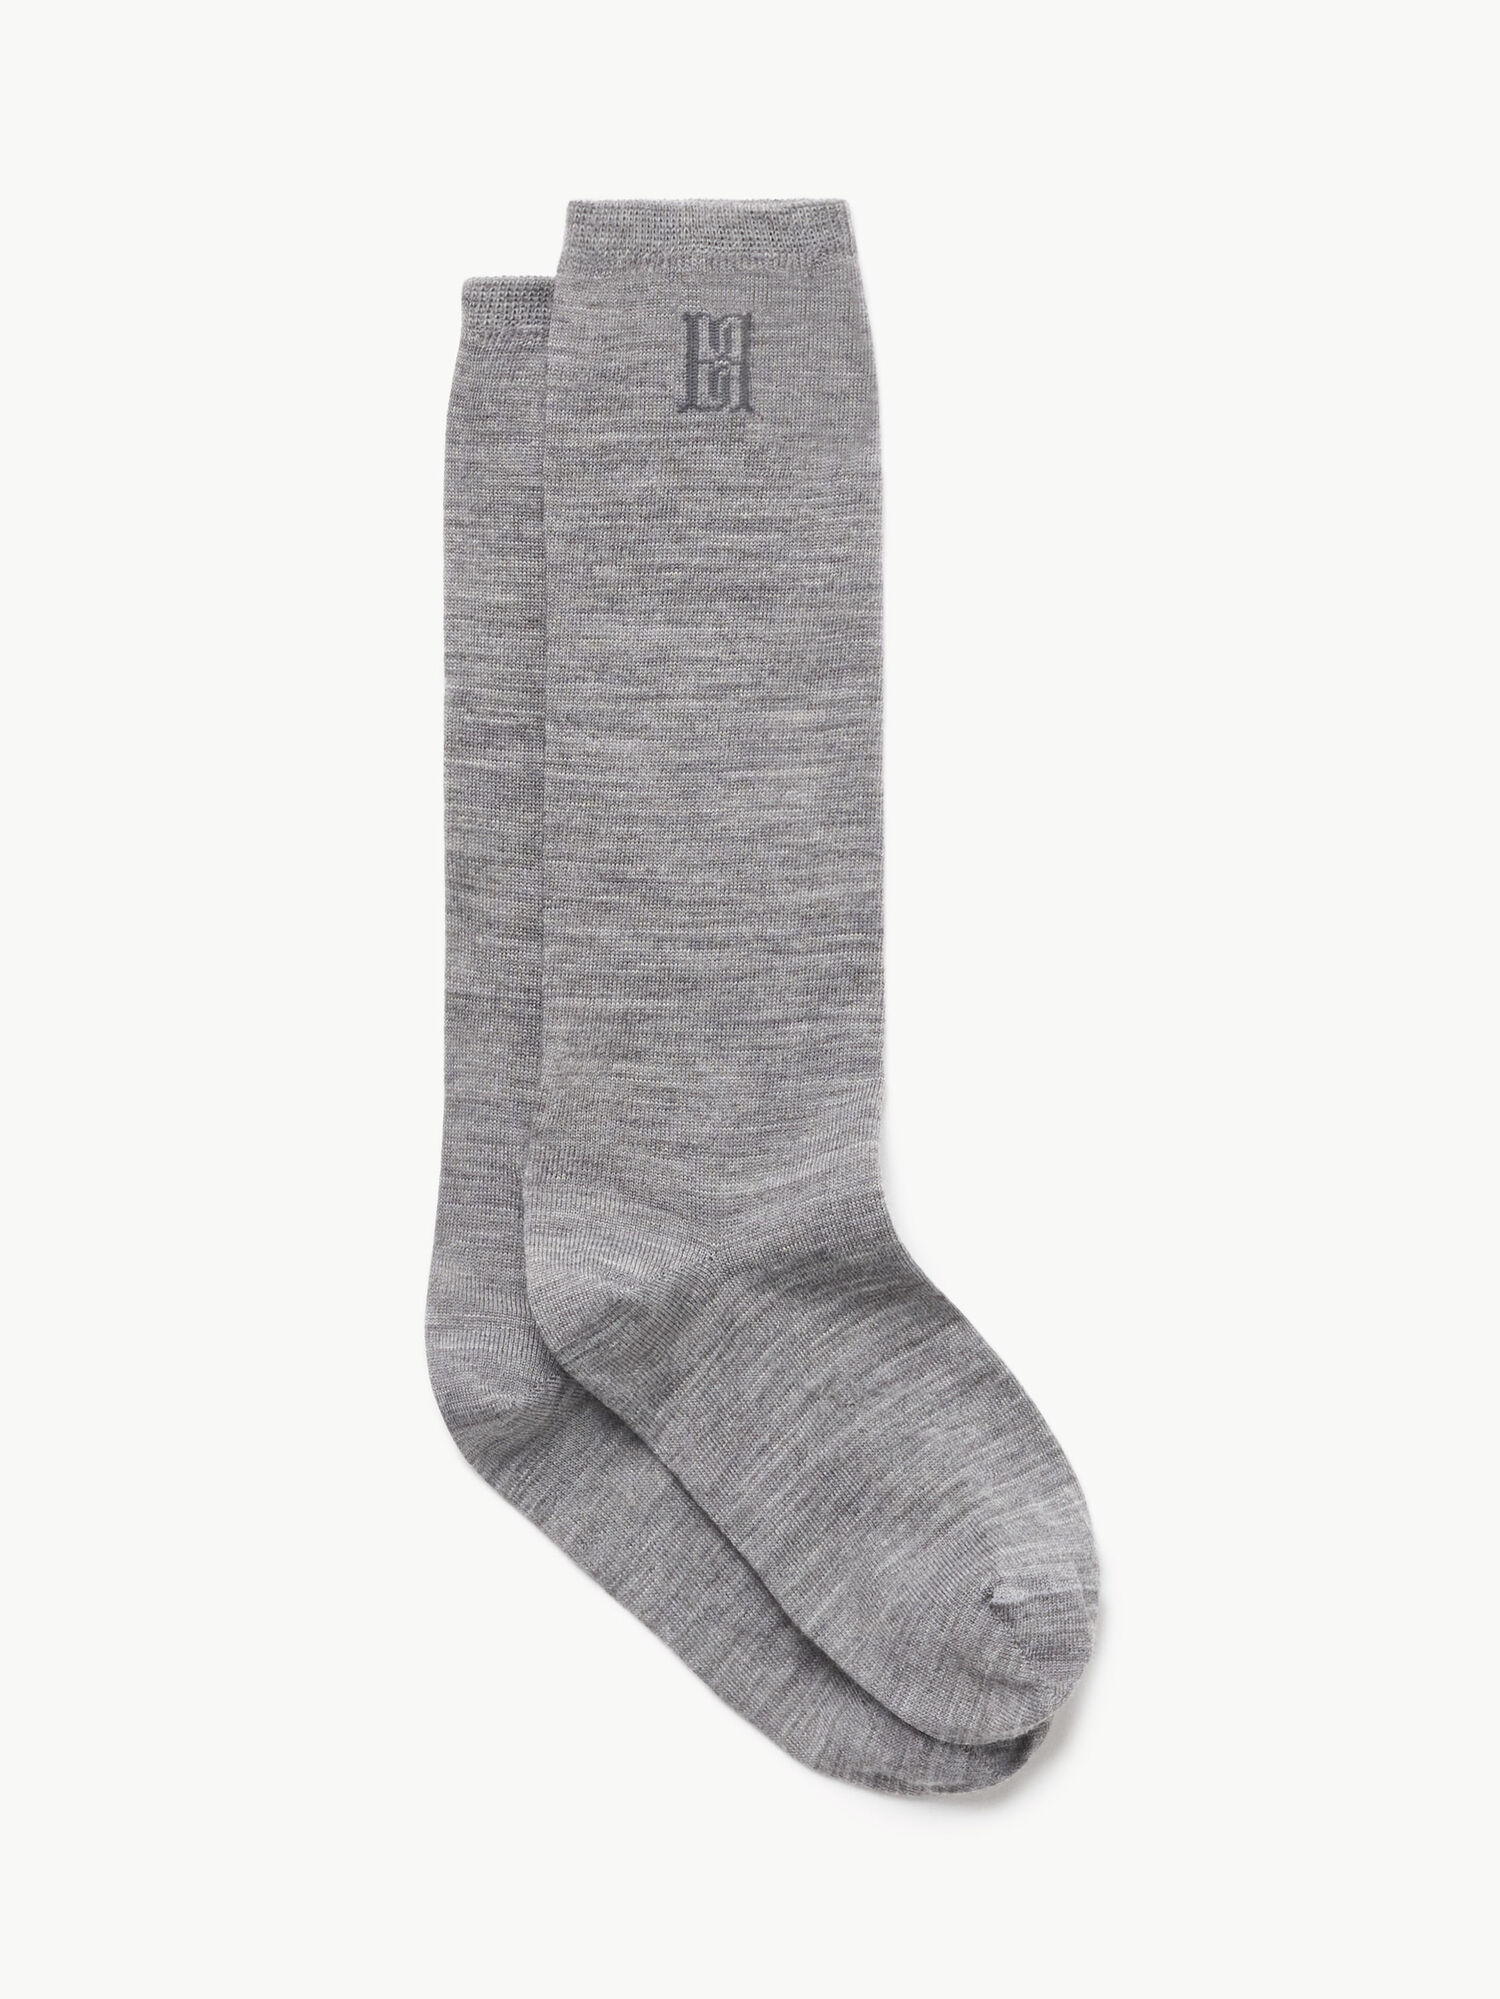 Leiann socks